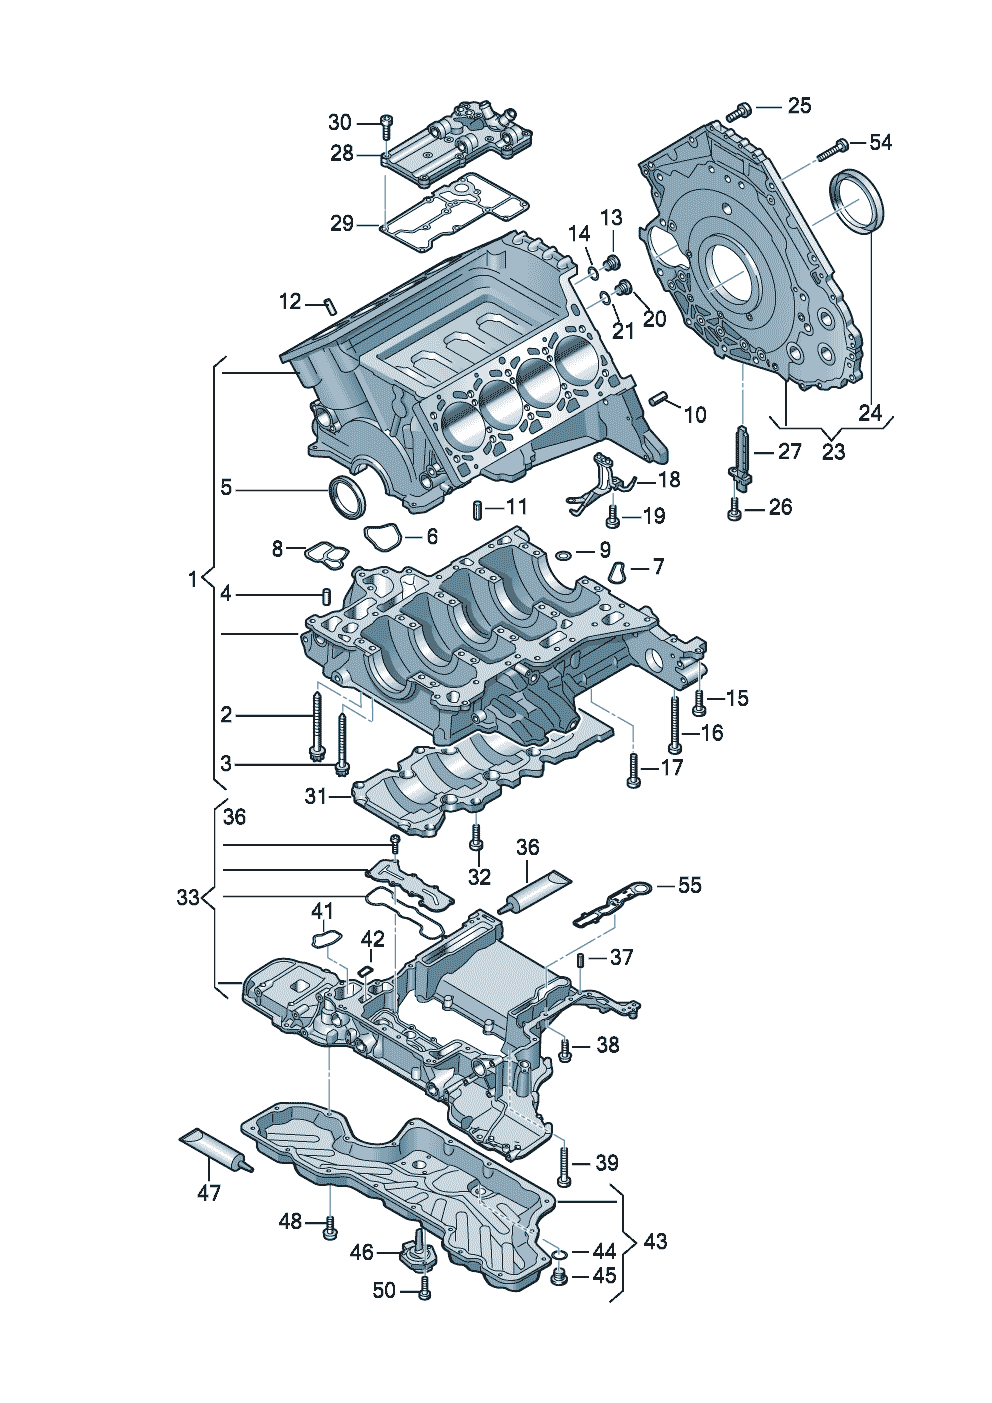 oil sumpSealing flangecylinder block 4.0 ltr. - Audi A8 - a8